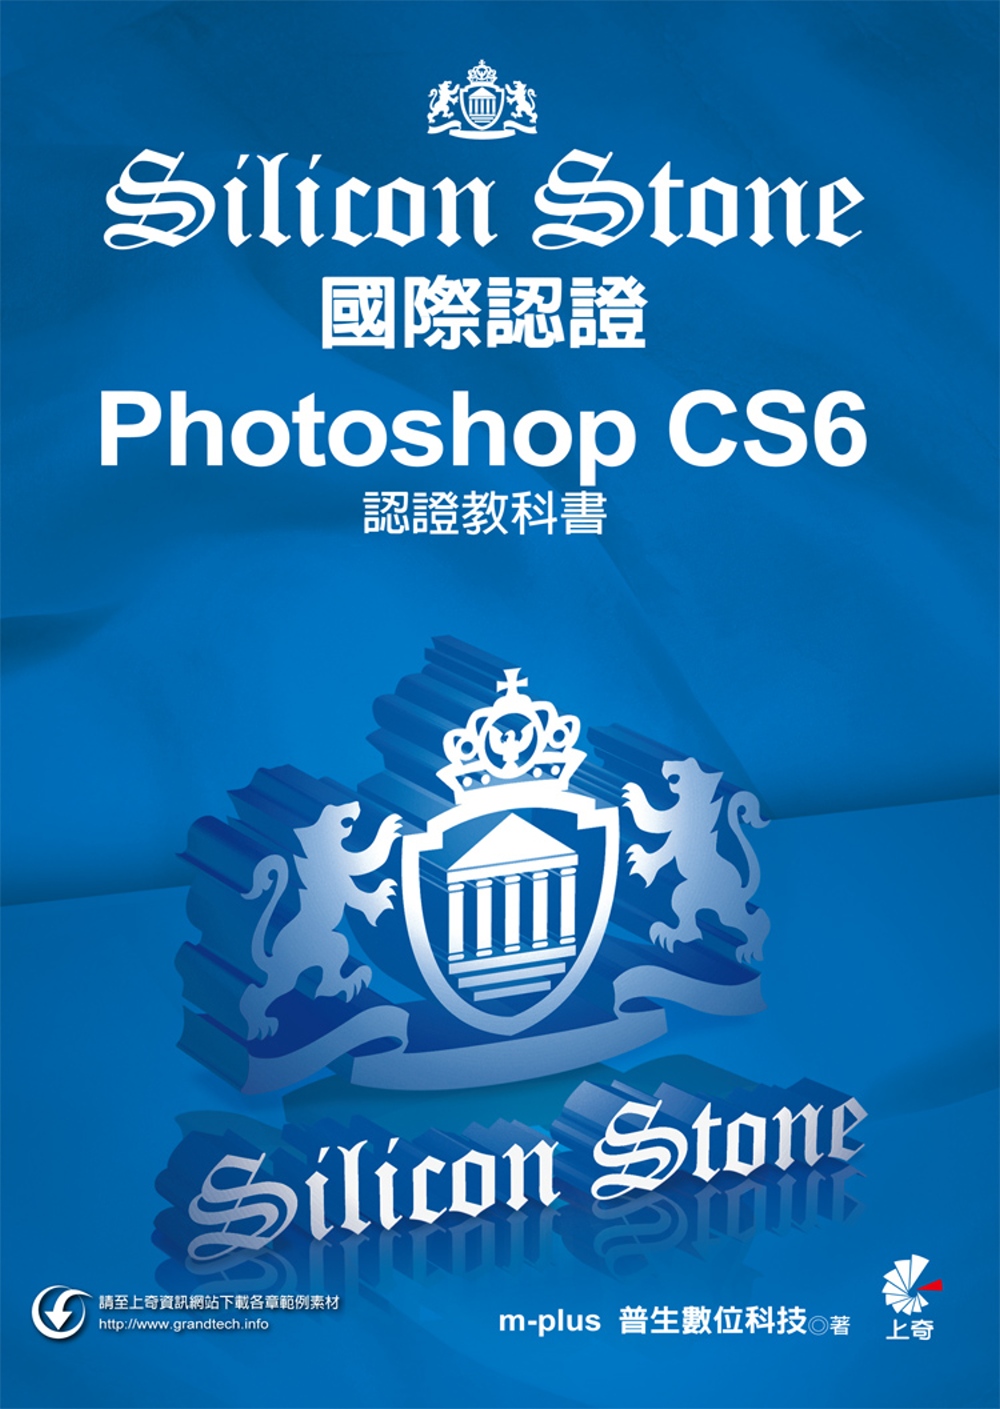 Photoshop CS6 Silicon Stone 認證...